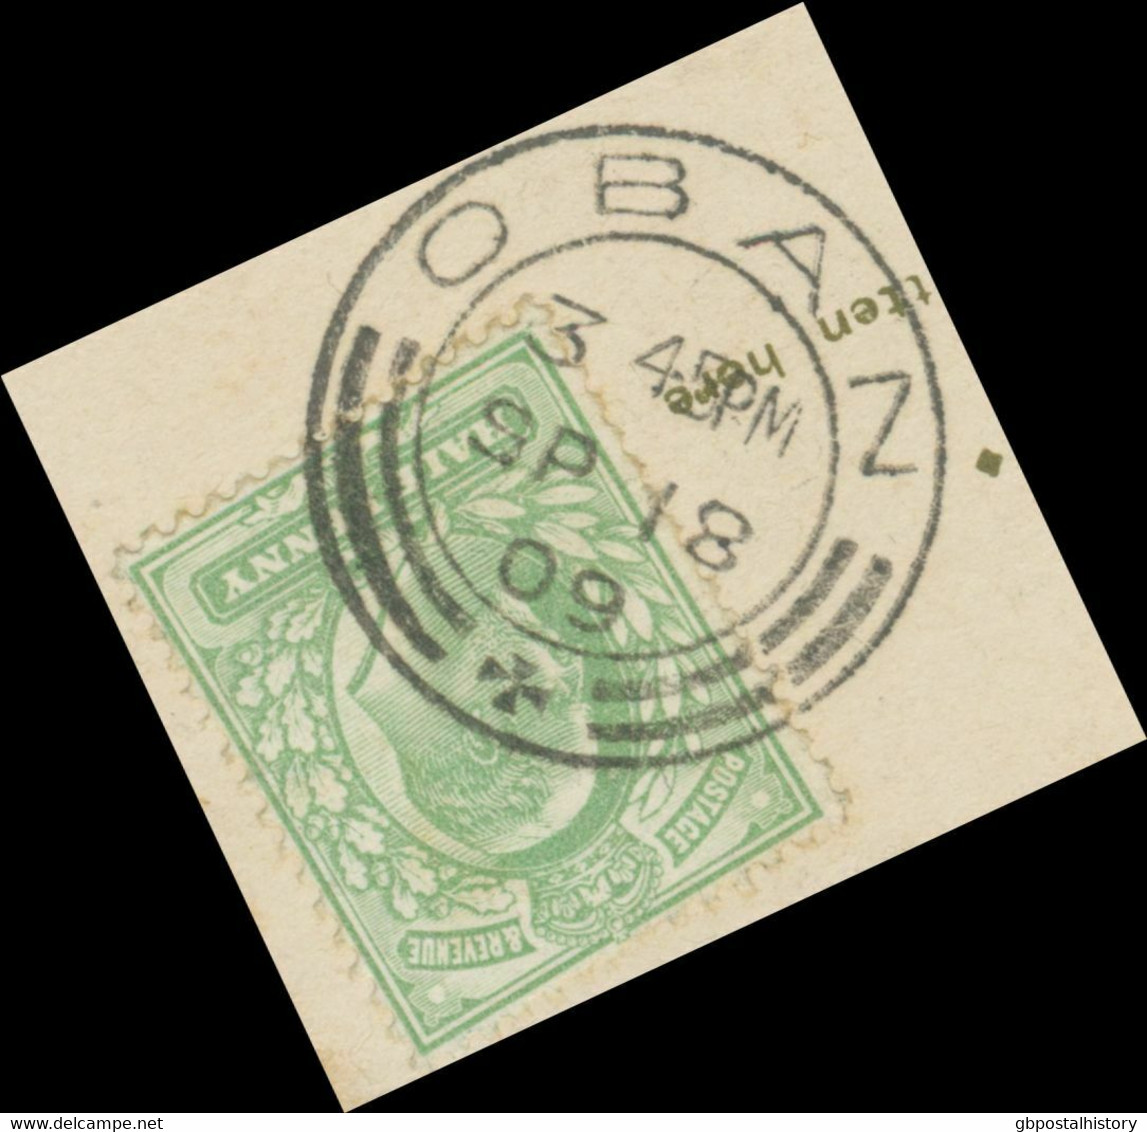 GB SCOTTIS VILLAGE POSTMARKS „OBAN“ Superb Rare Strike (25mm, Time Code „3 45PM“) Superb Postcard POSTMARK-ERROR - Escocia